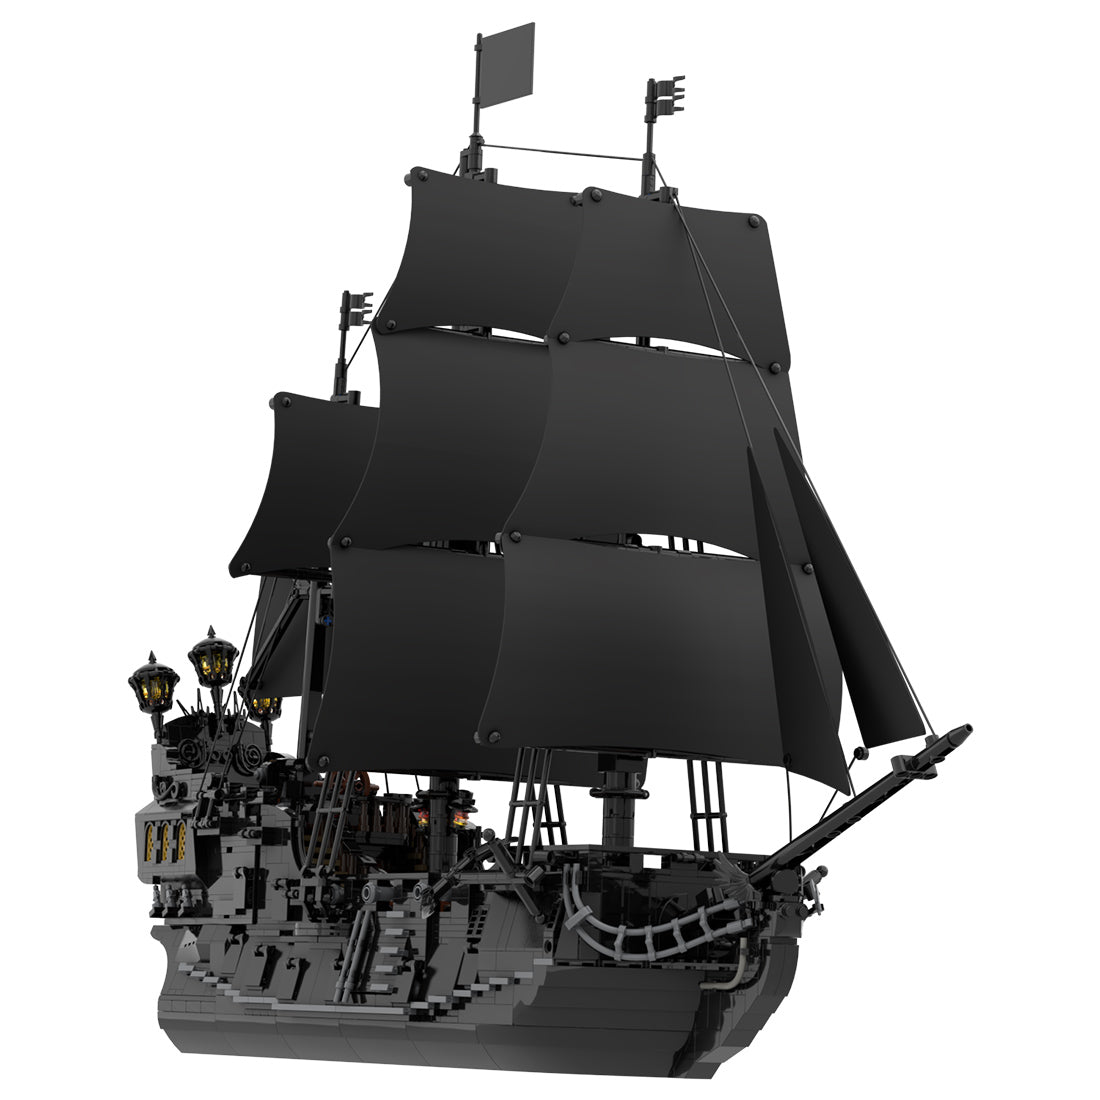 The Black Pearl Pirate Ship Model